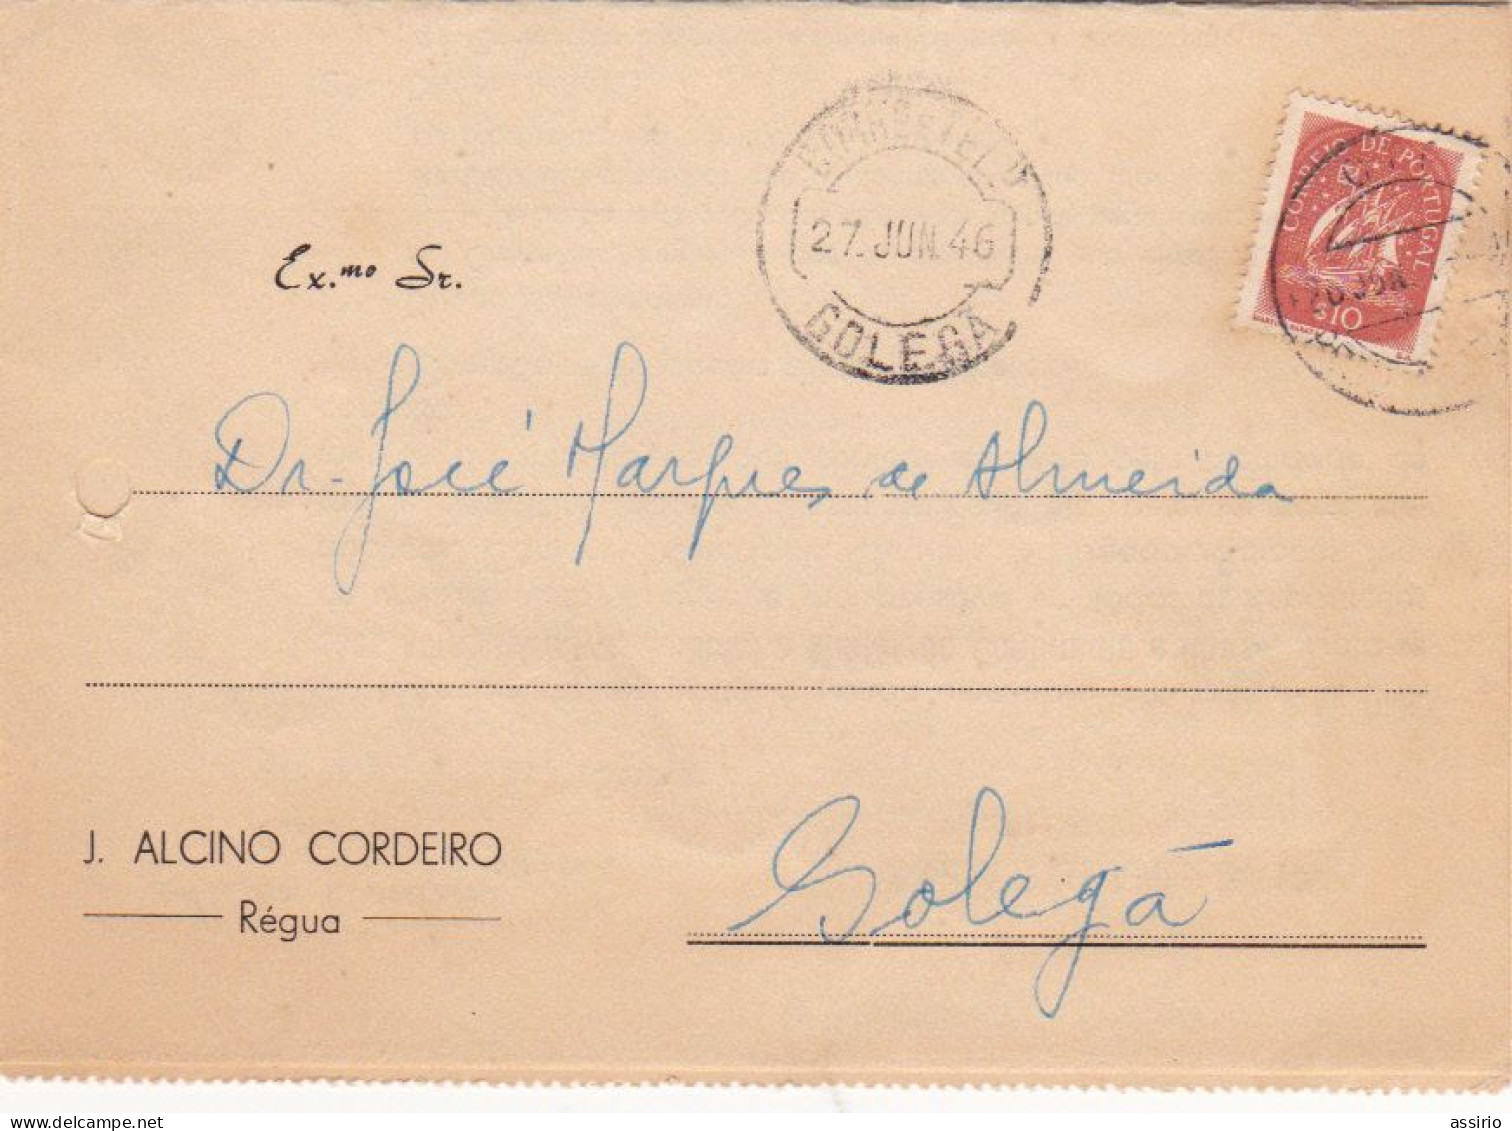 Portugal - Régua  1946   - J. Alcino Cordeiro  (carta) - Vila Real